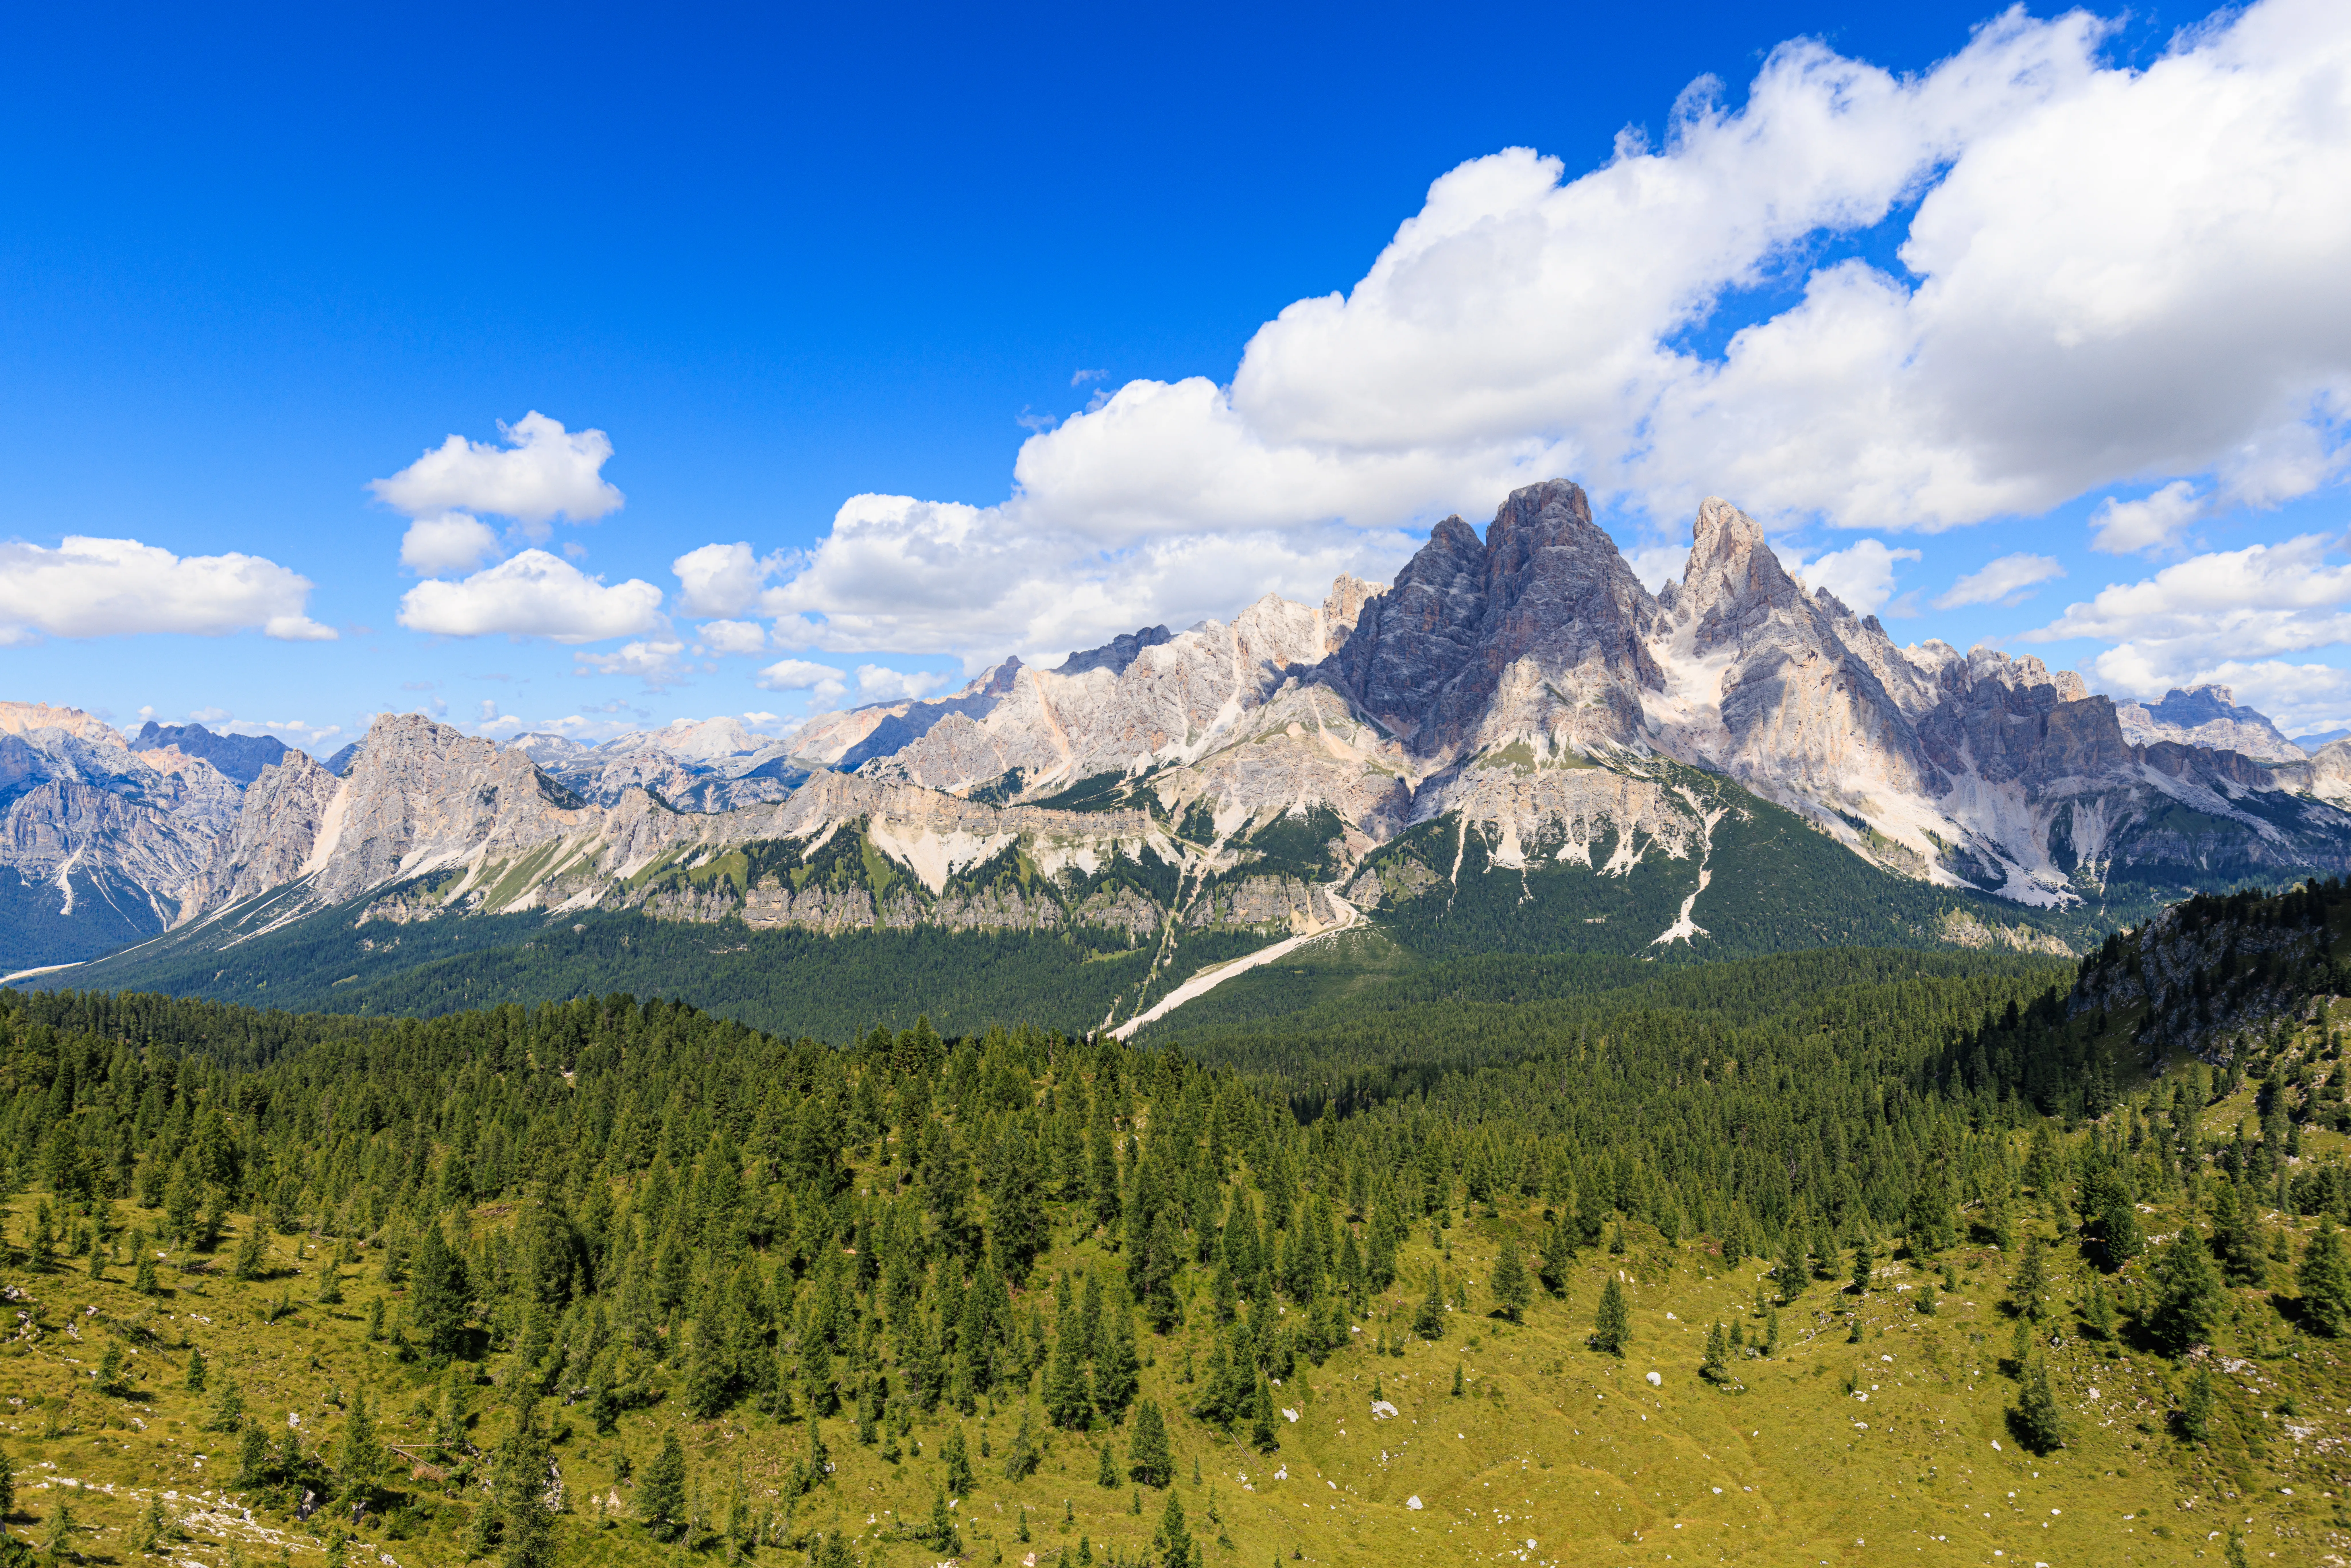 Dolomites view from mount Faloria - Italy